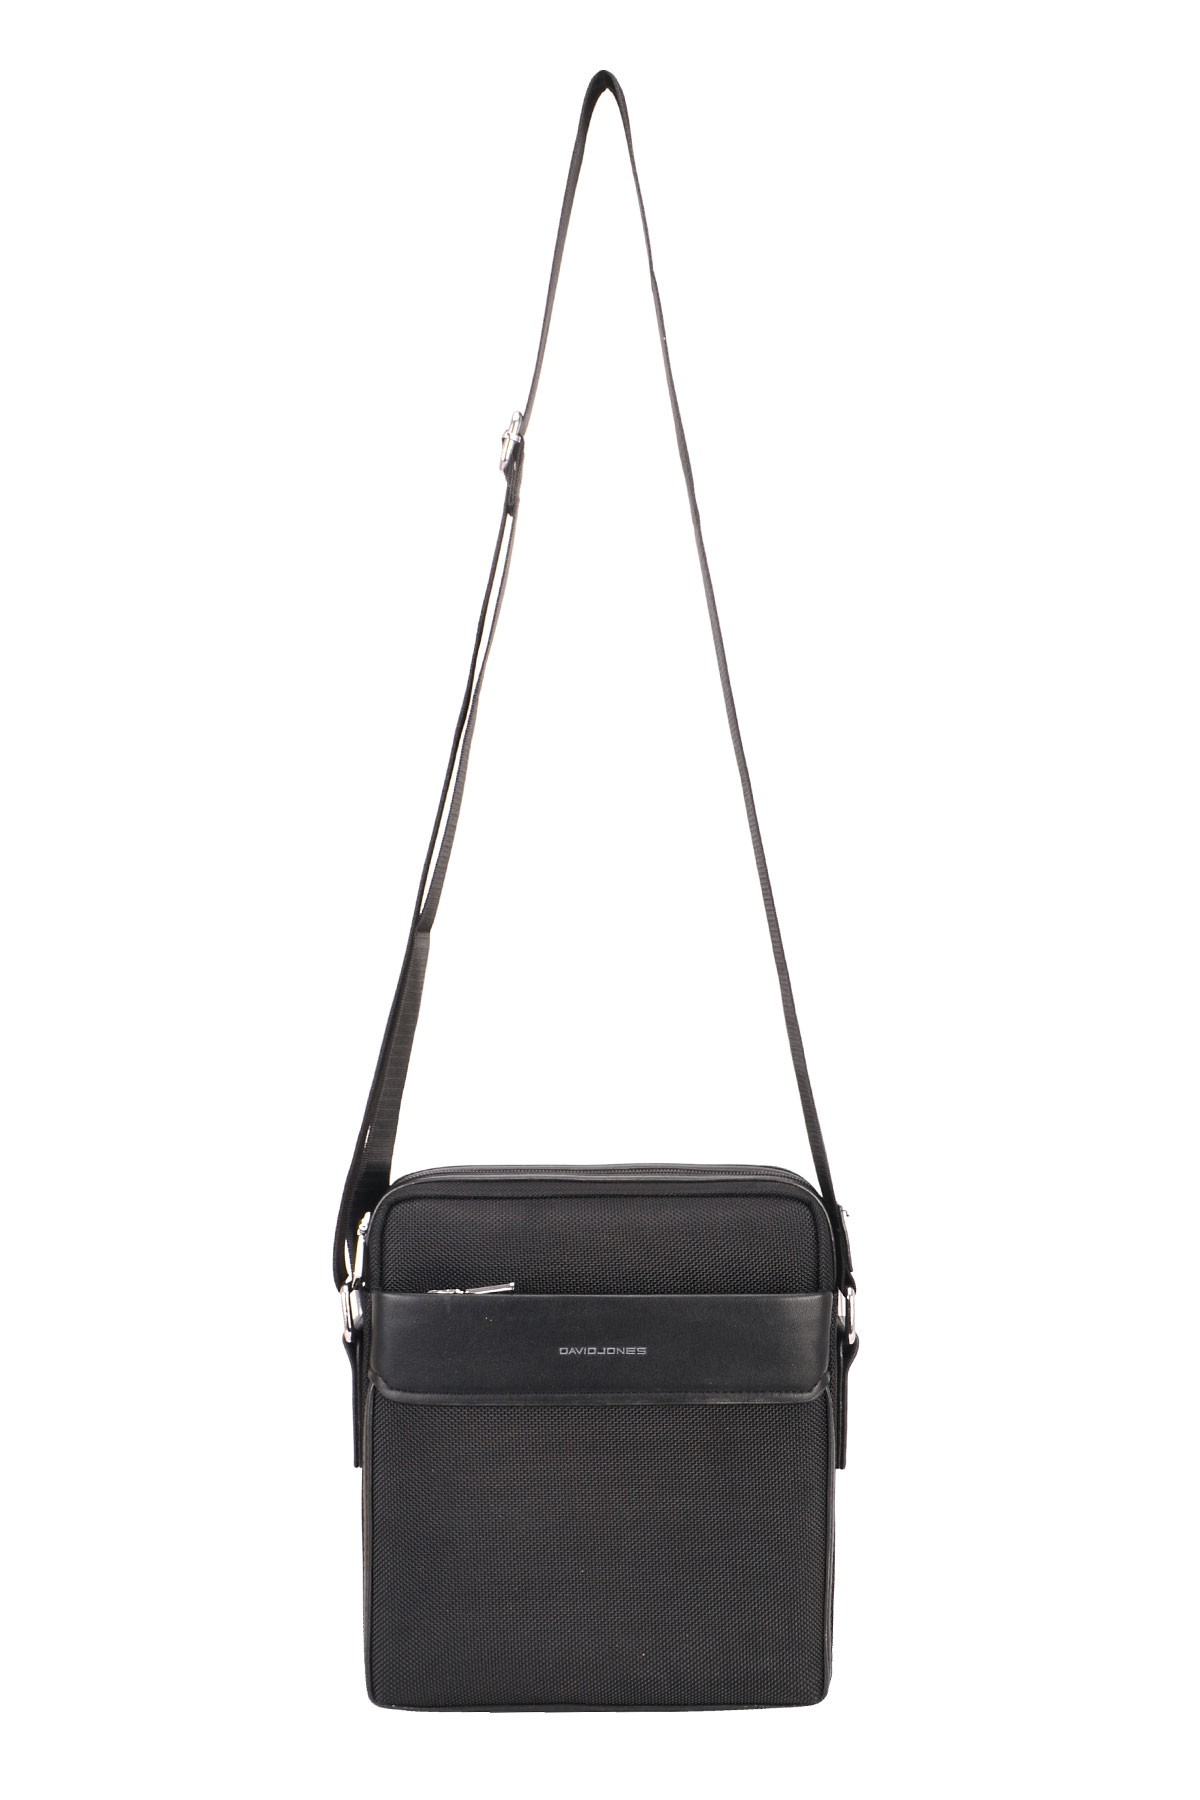 David Jones Designer Handbag for Women Leather Shoulder Crossbody Bag  Vintage Top-Handle Bags Fashion Female Casual Tote Bag - AliExpress